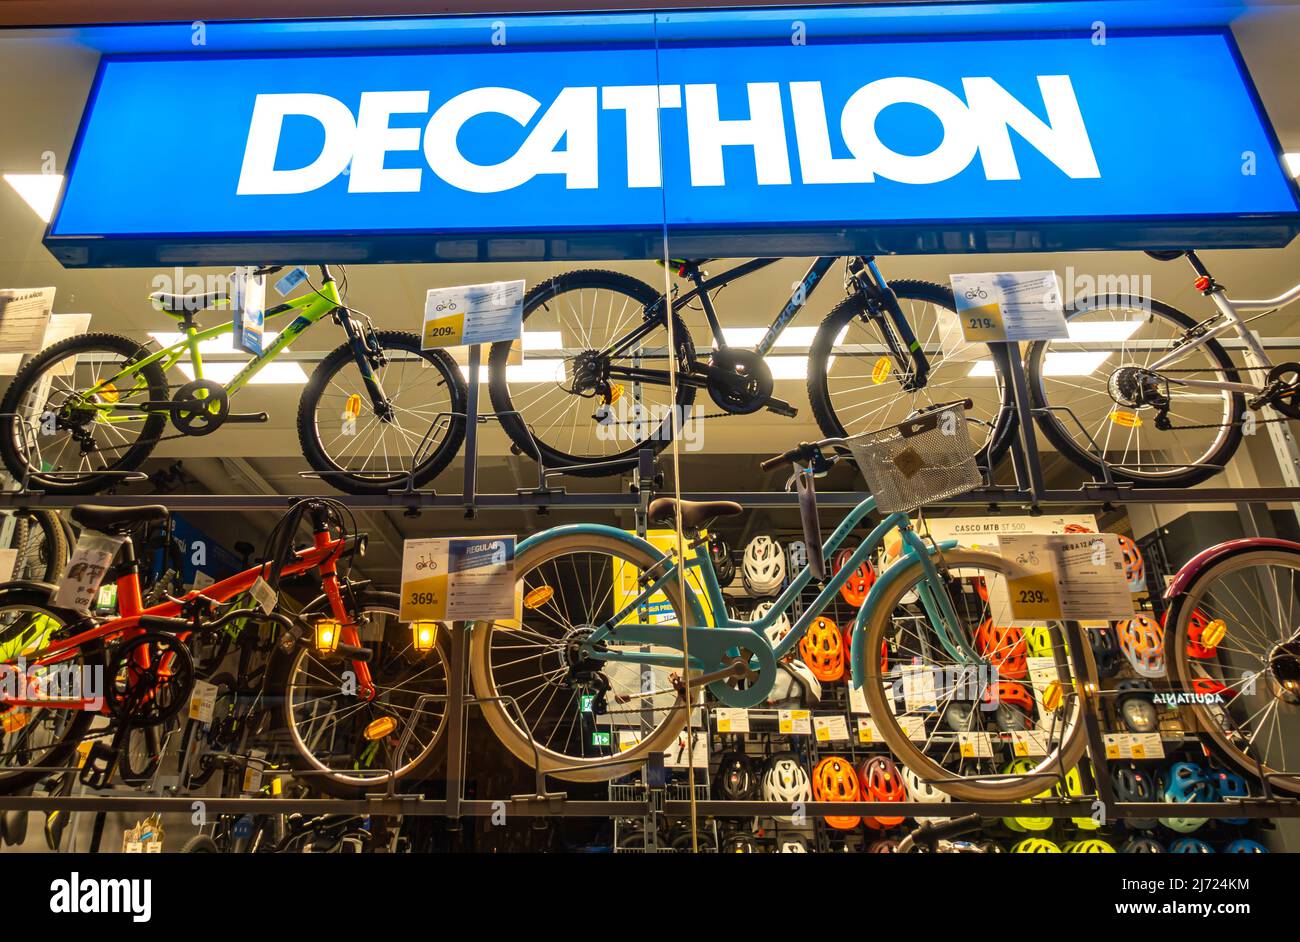 Decathlon Sports Shop on the App Store